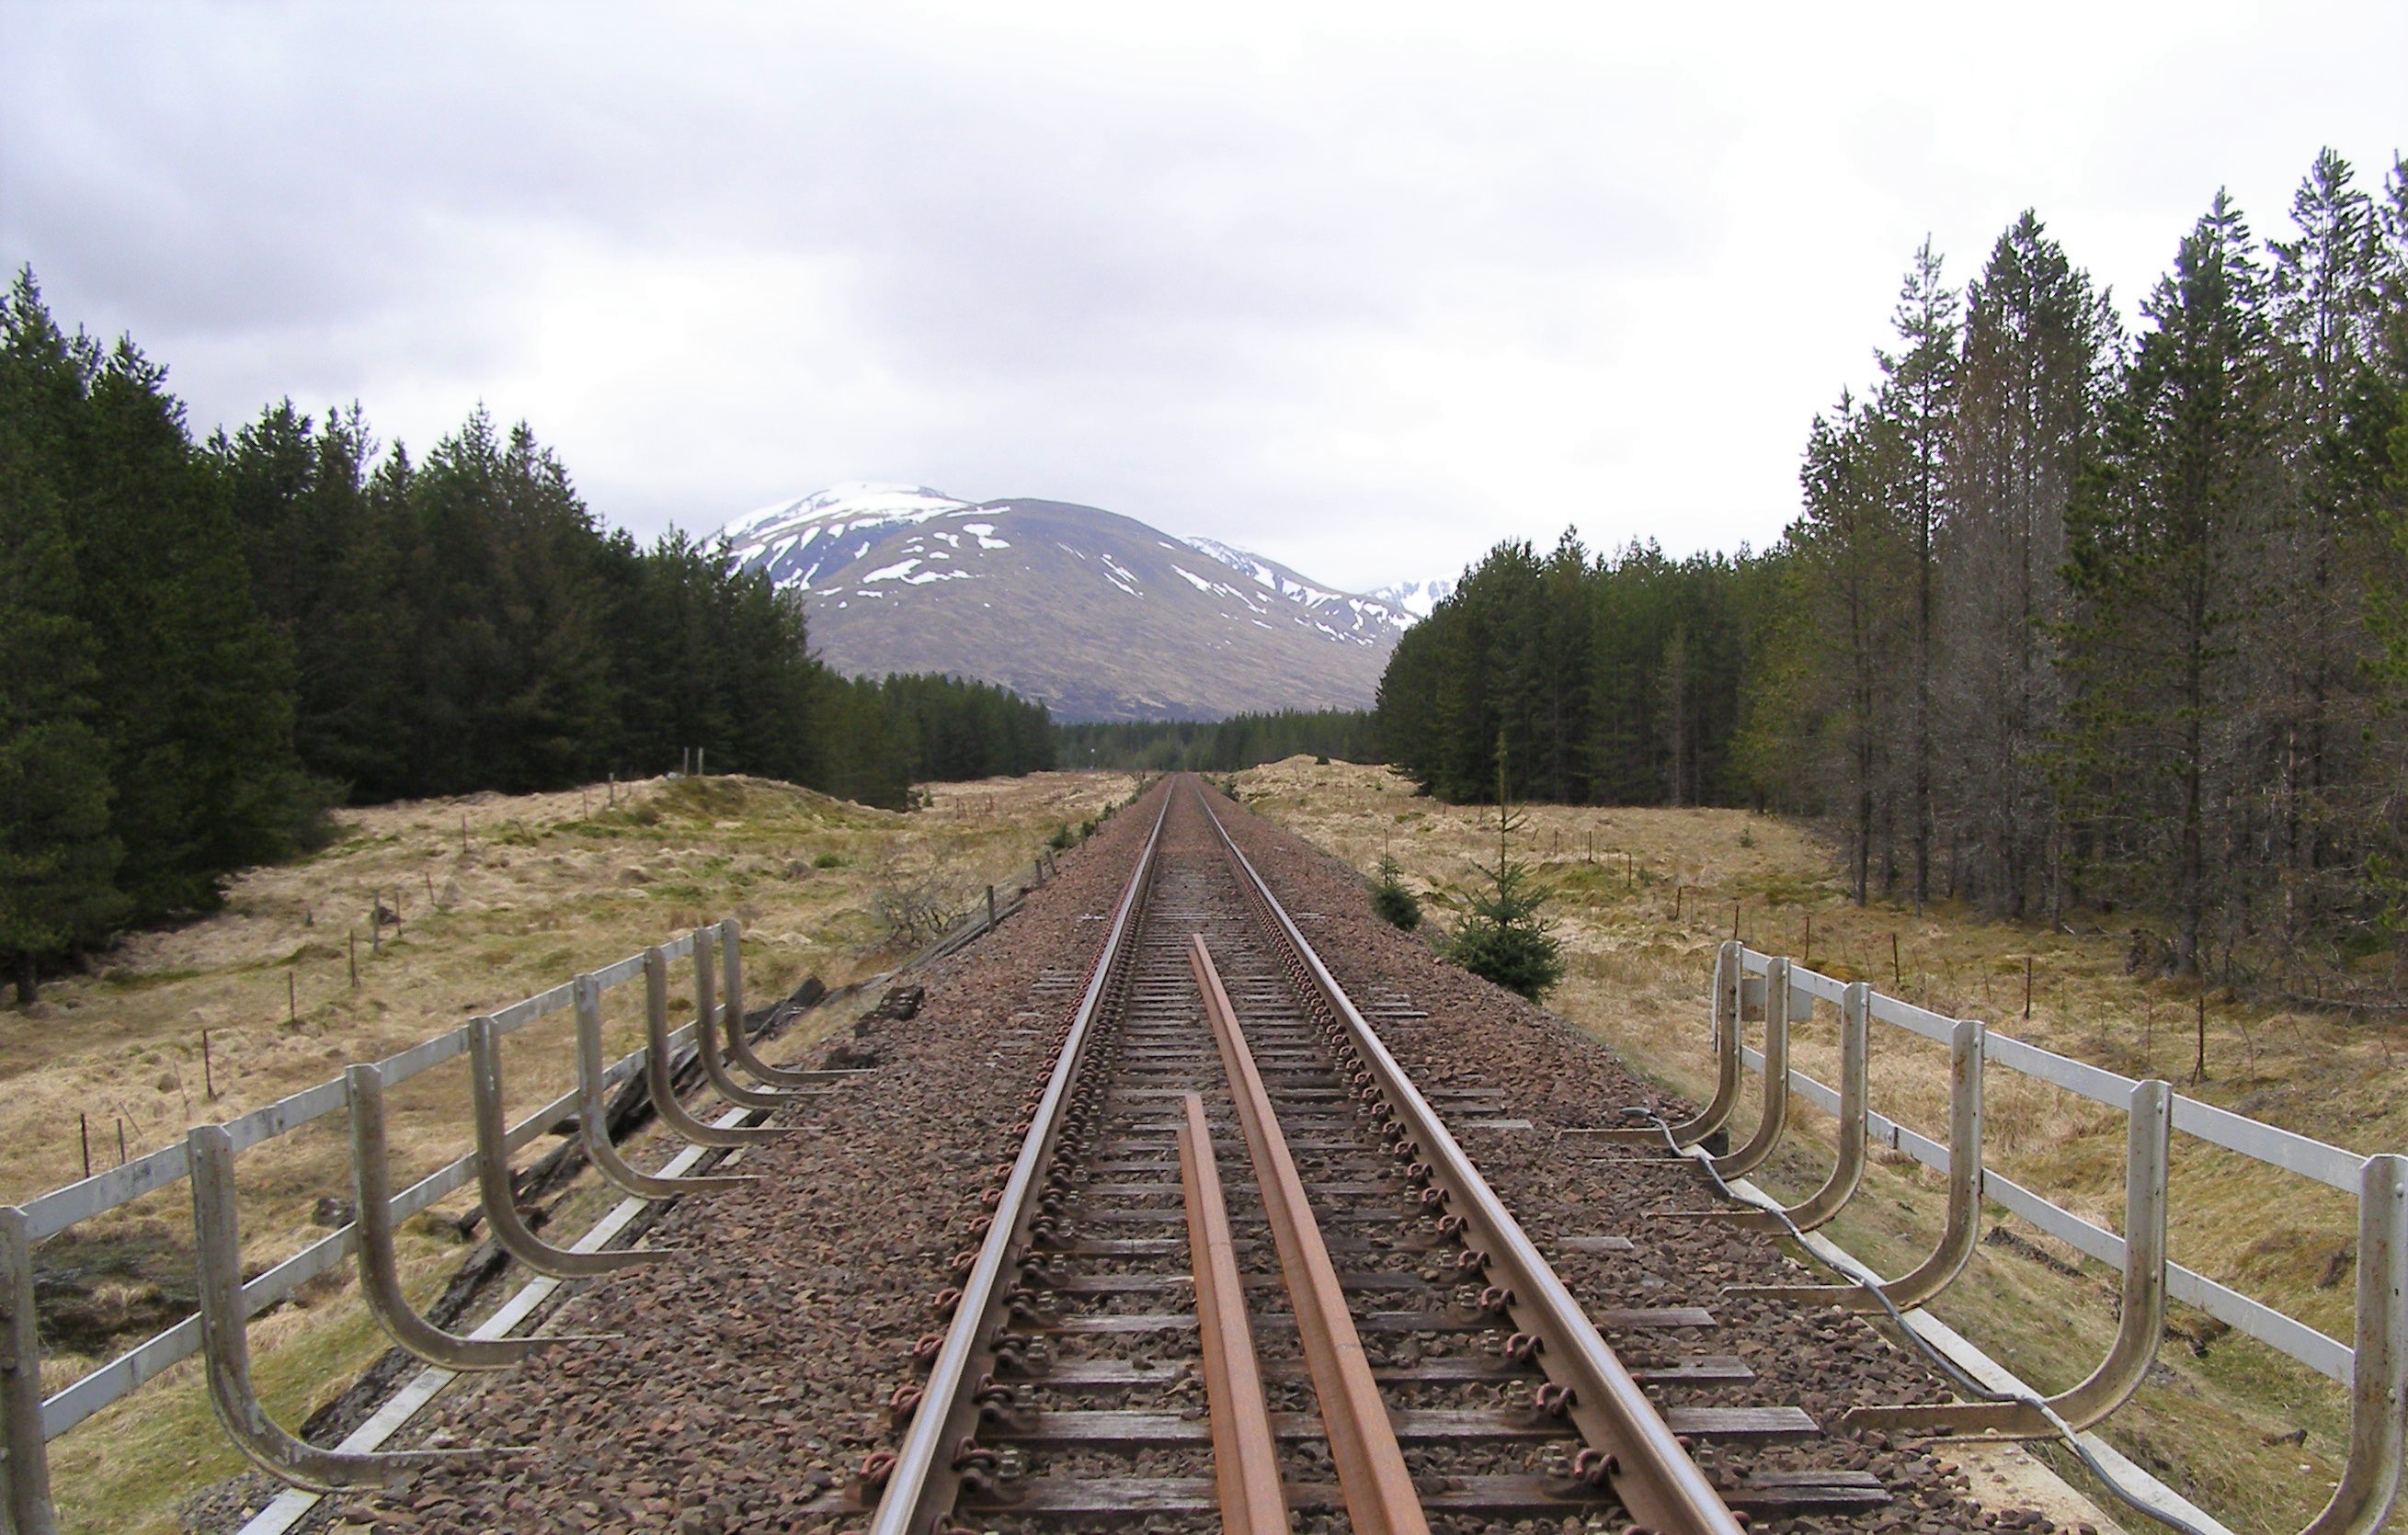 Rannoch timber rail project 'on track' with Memorandum of Understanding